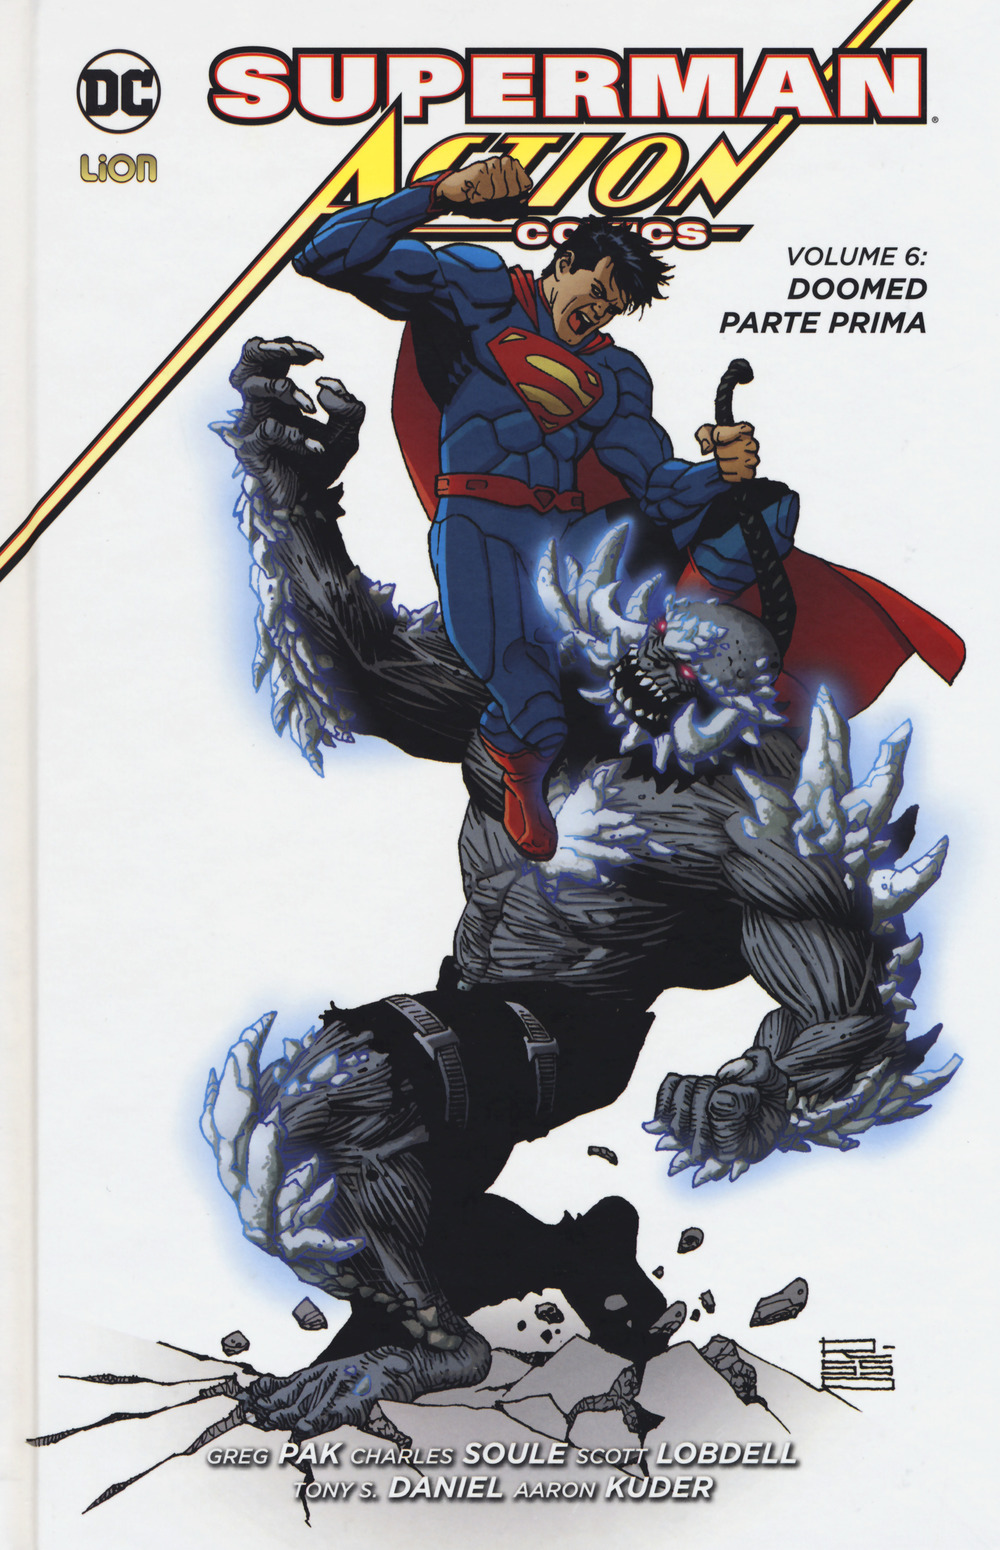 Superman. Action comics. Vol. 6: Doomed. Parte prima